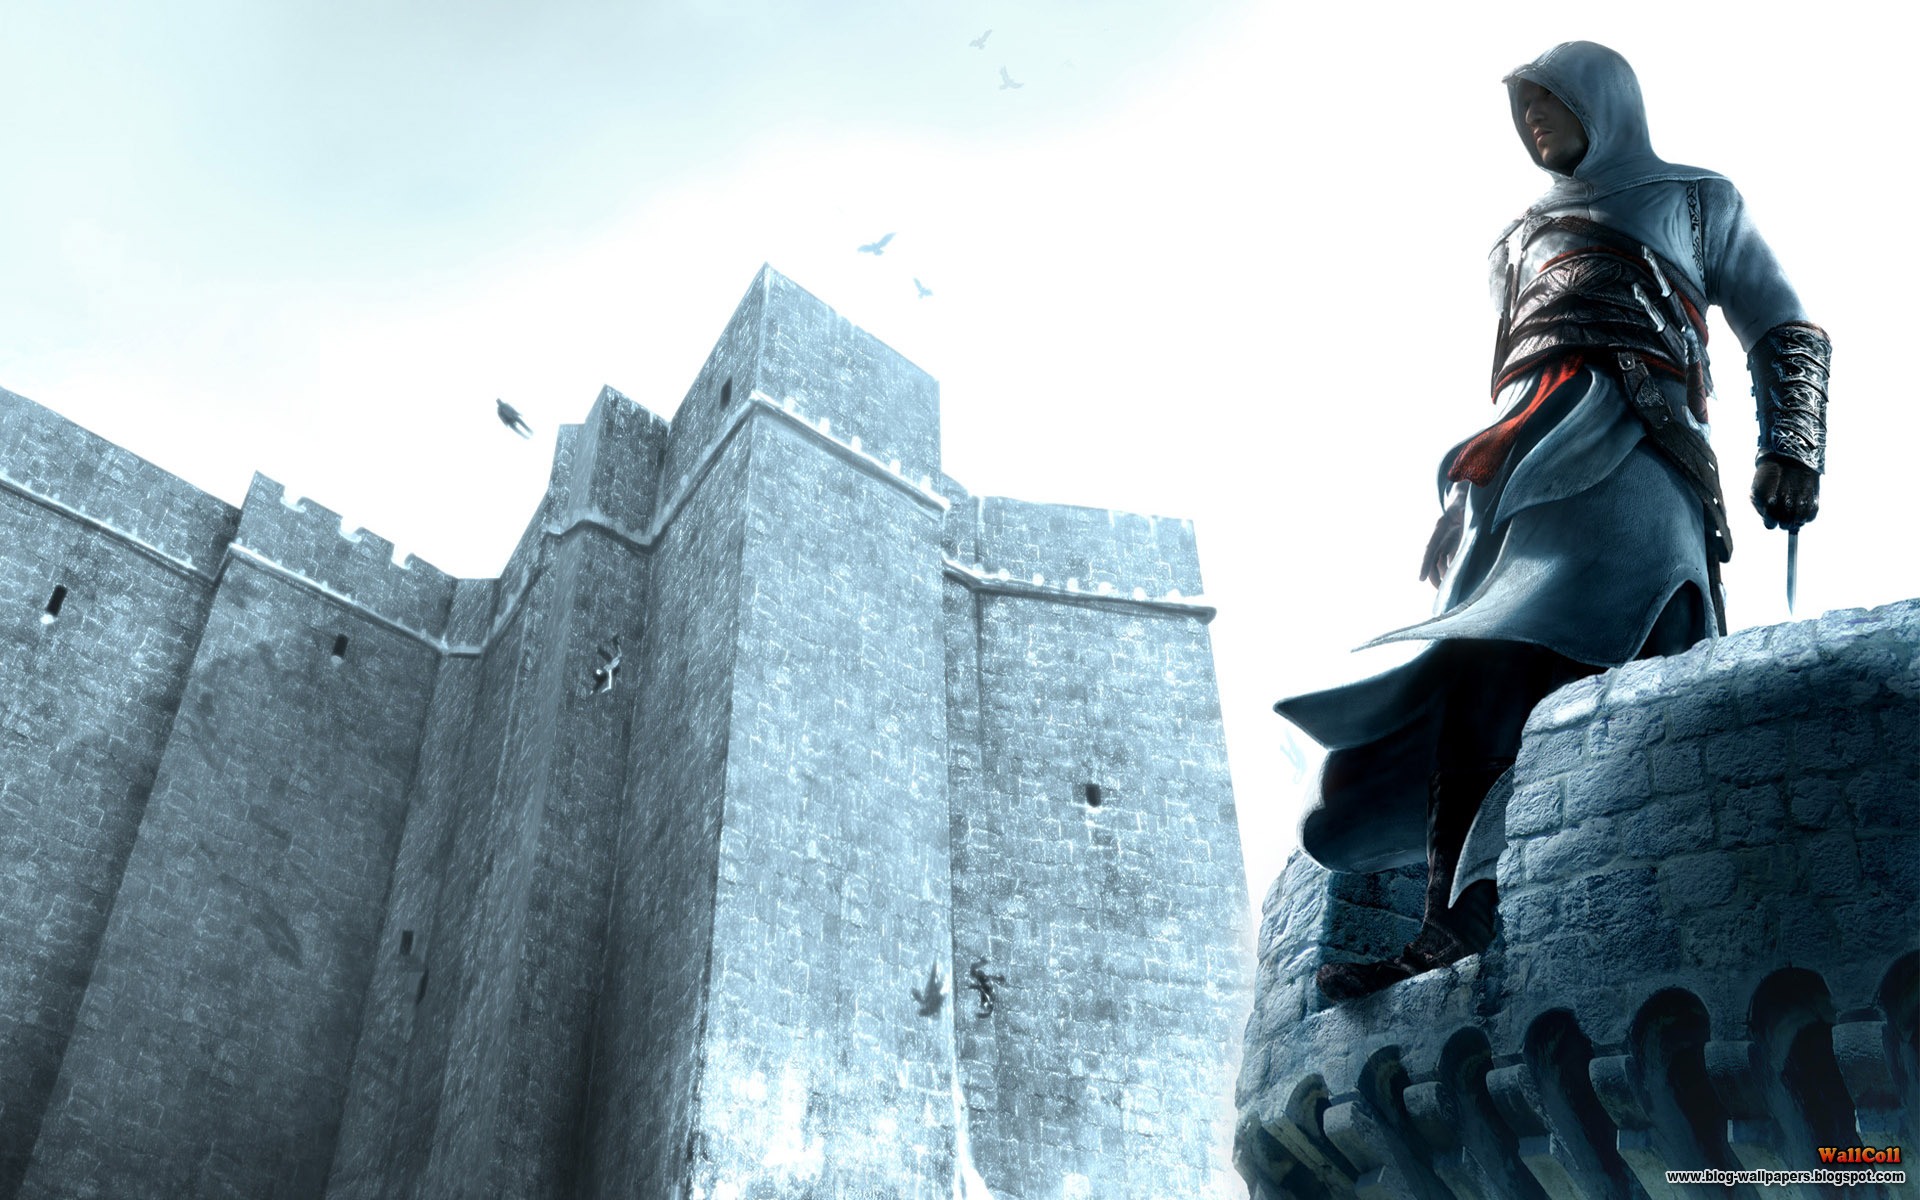 Assassins Creed 5